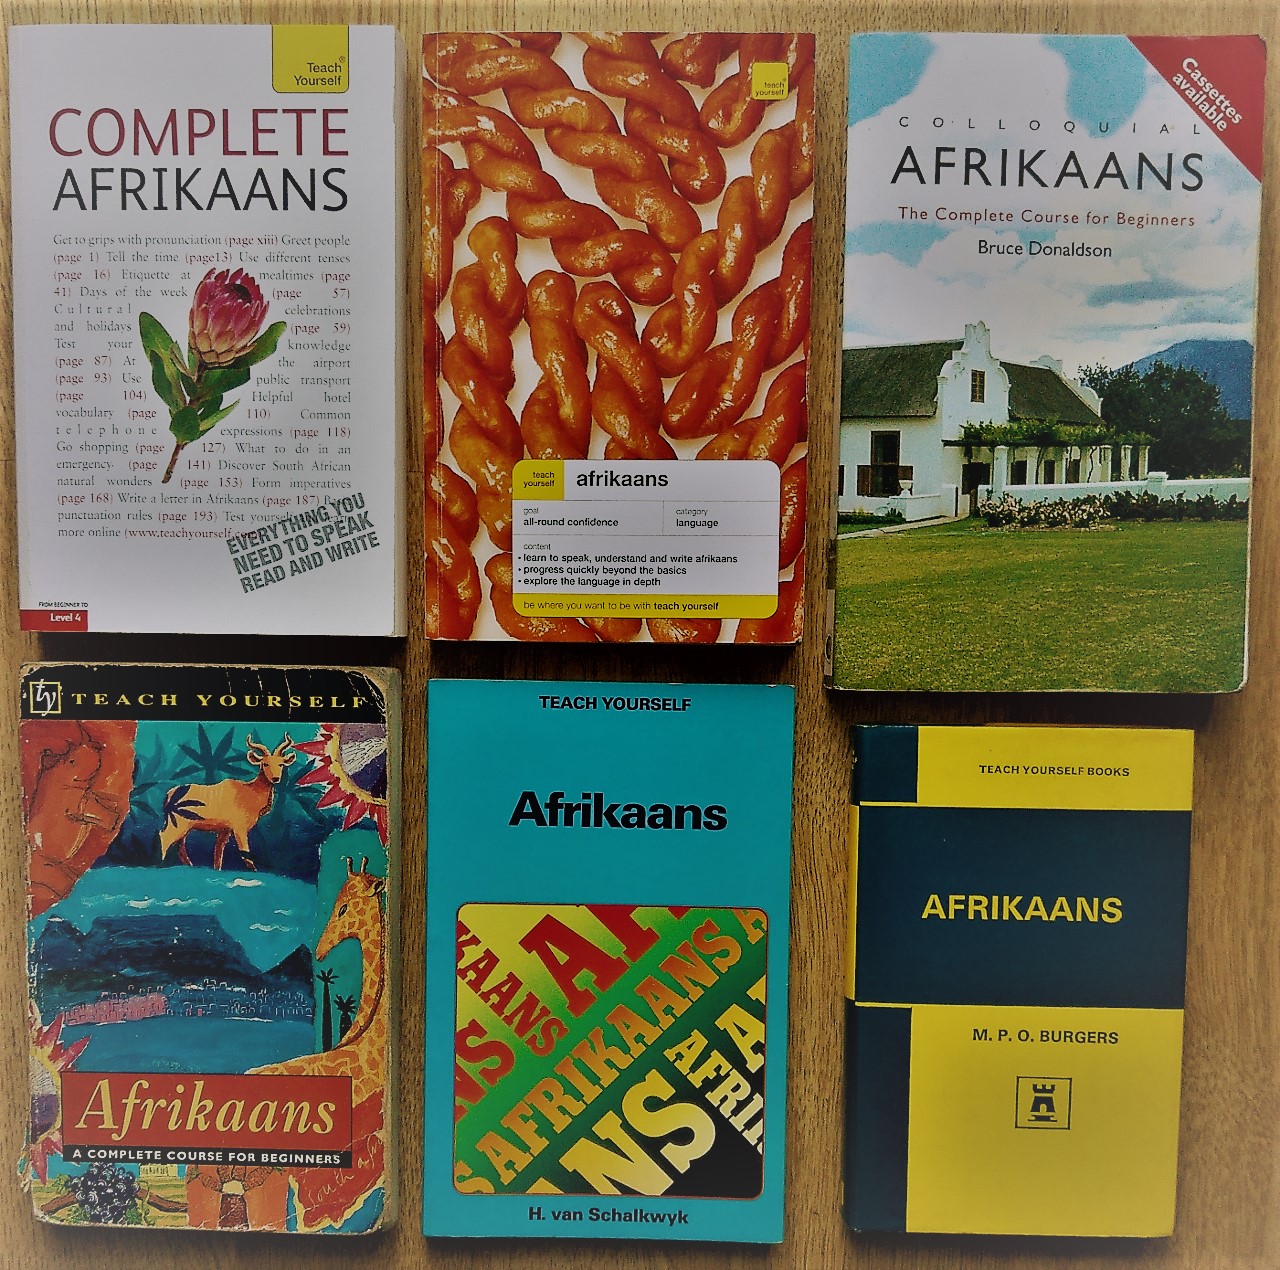 Afrikaans books